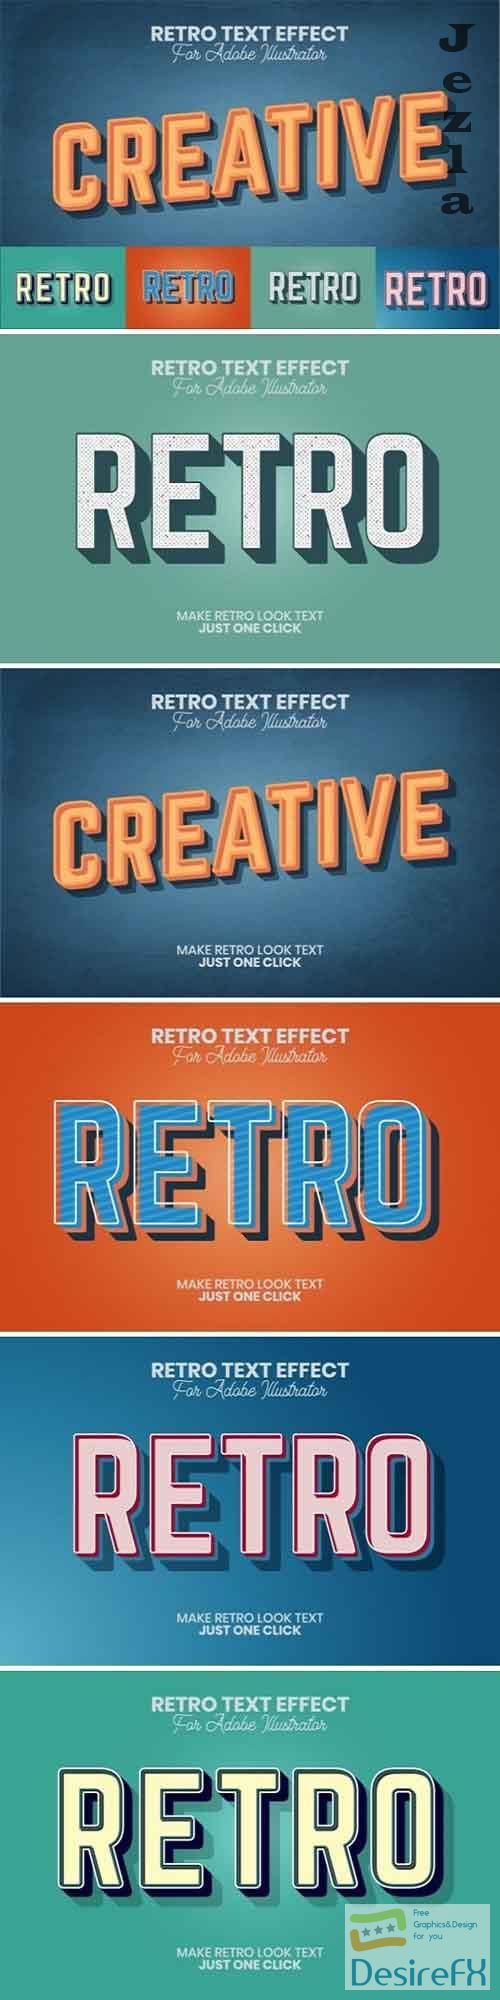 Retro Text Effect for Illustrator